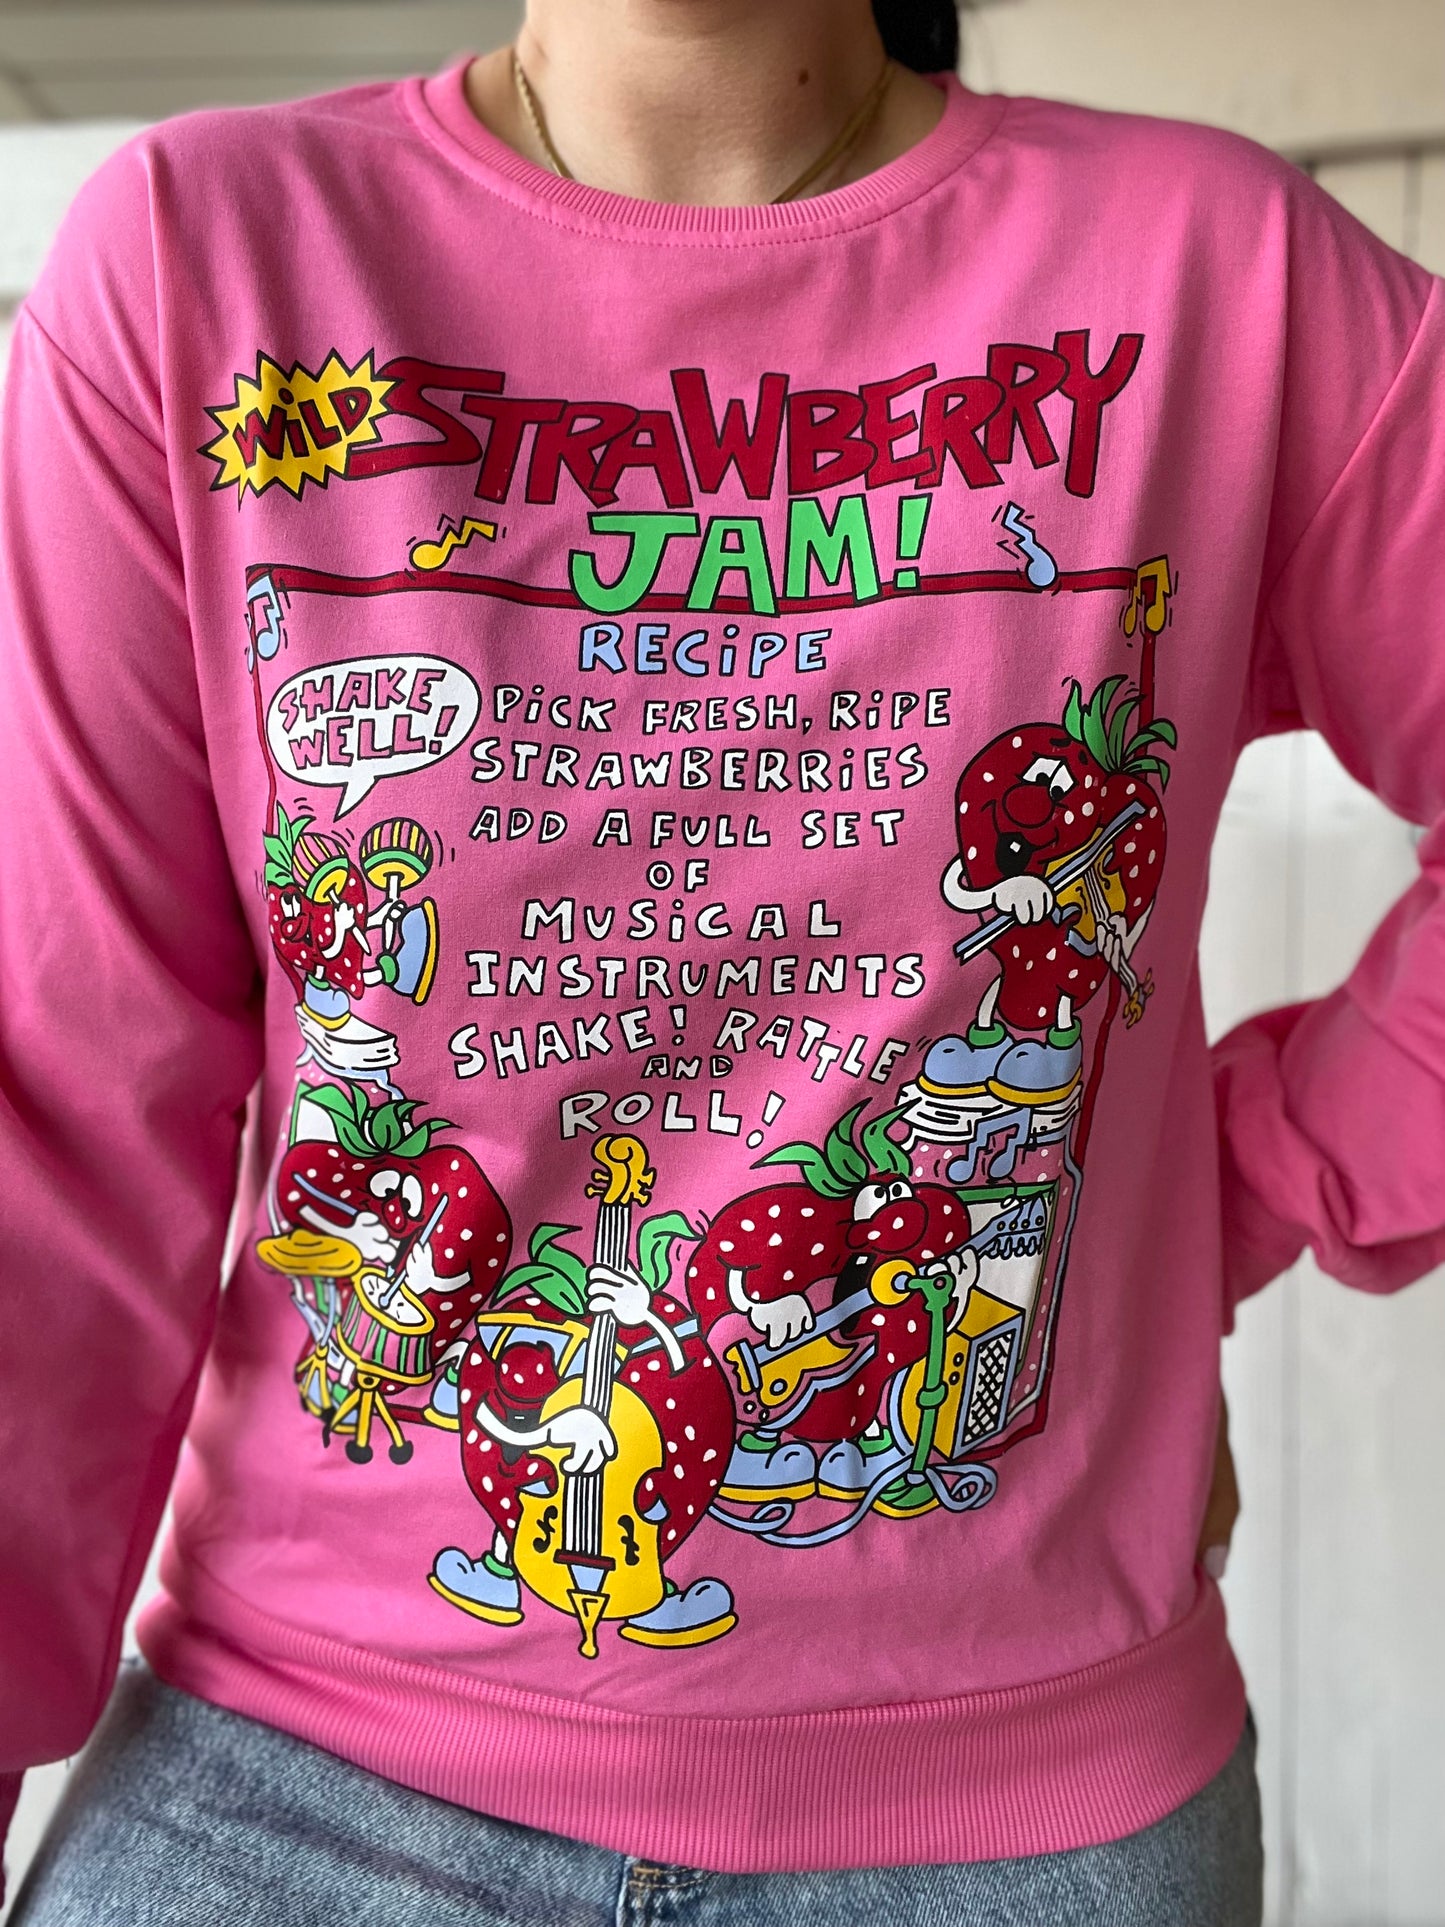 Strawberry Jam Sweater - Size M/L